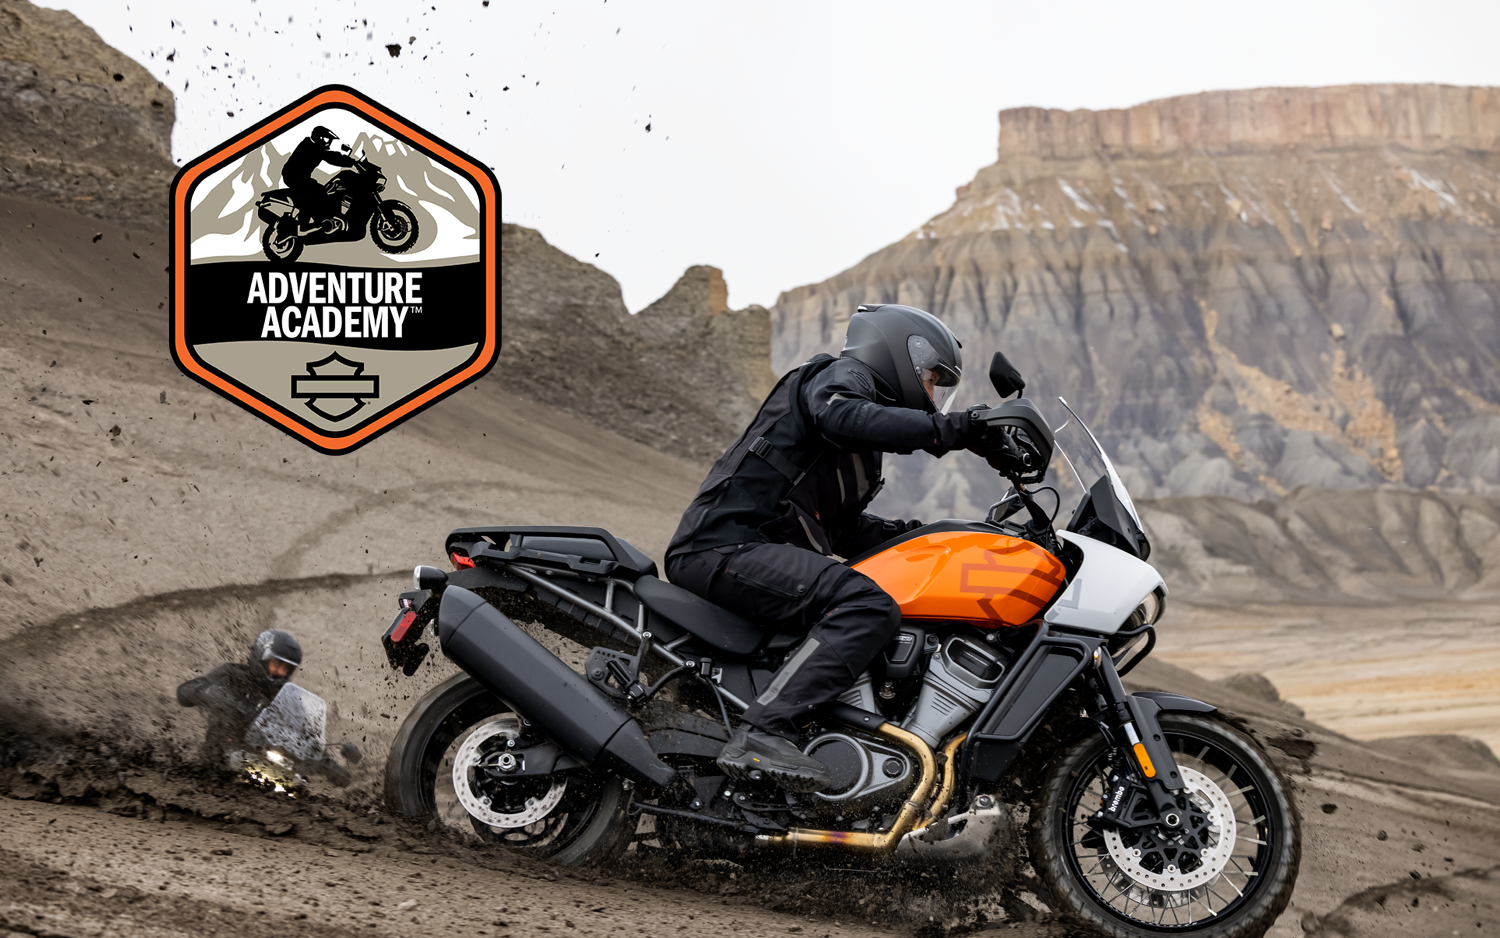 Harley-Davidson Adventure Academy